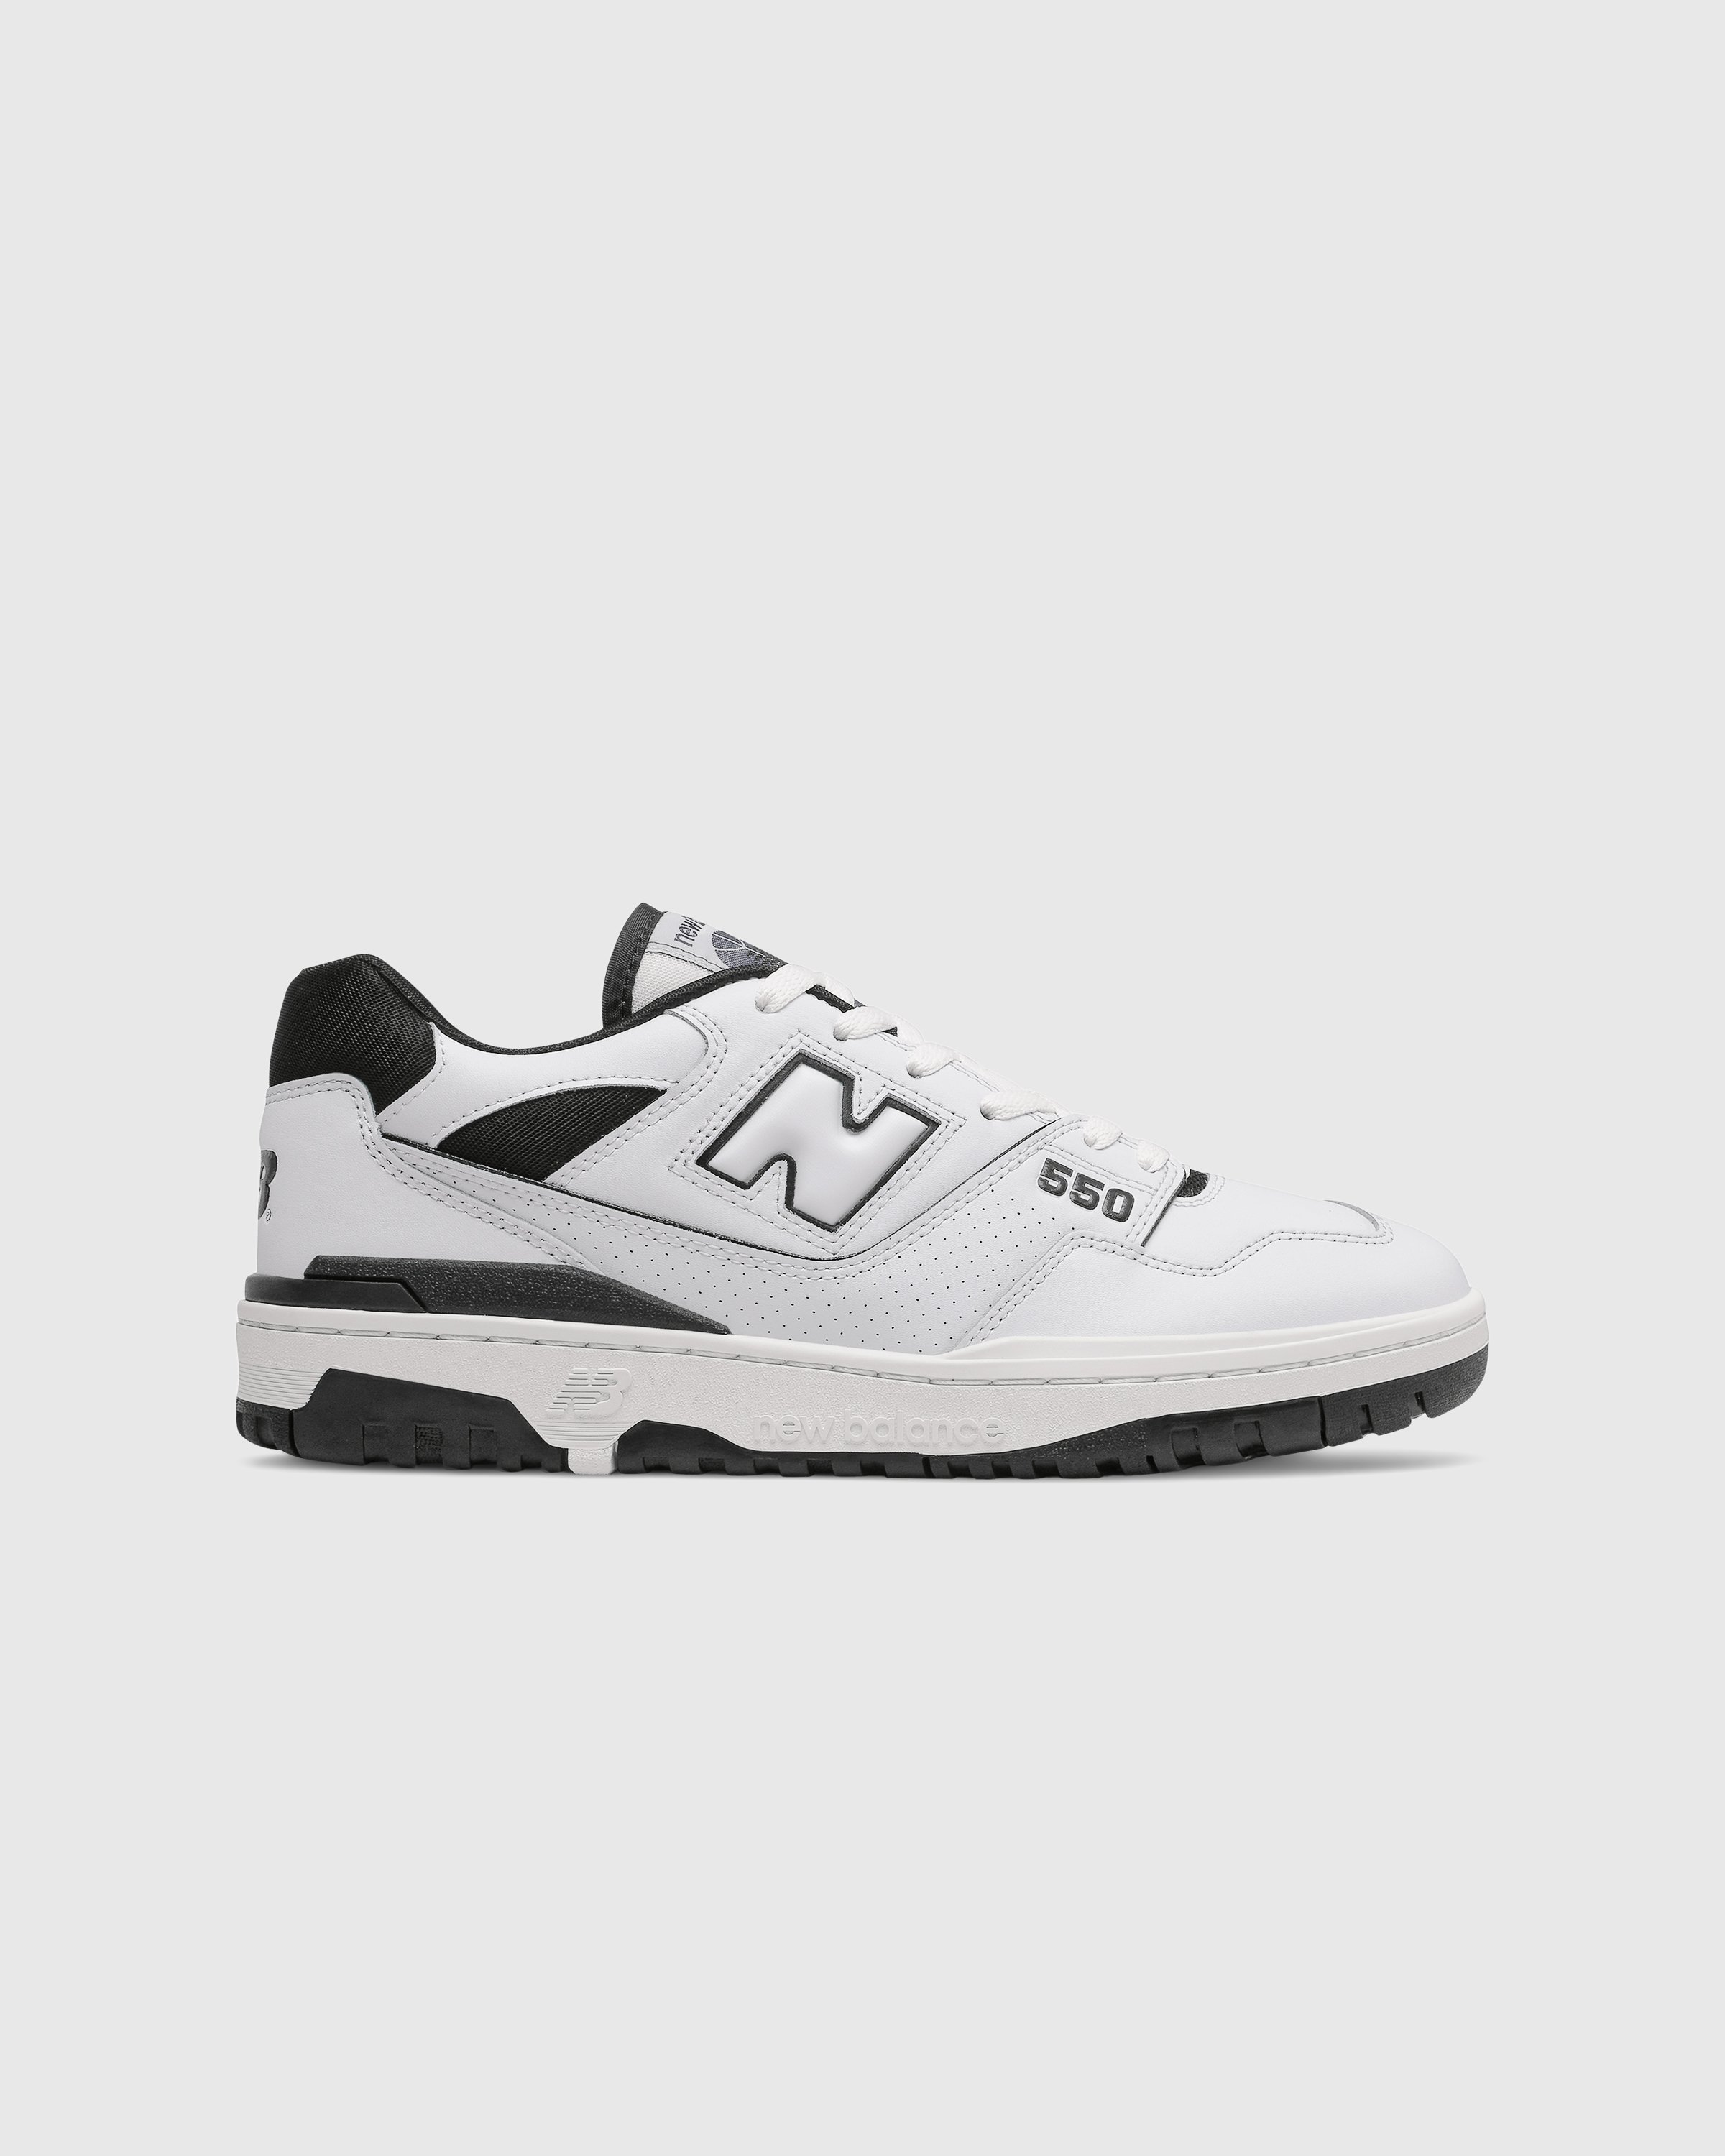 New Balance - BB550HA1 WHITE - Footwear - White - Image 1